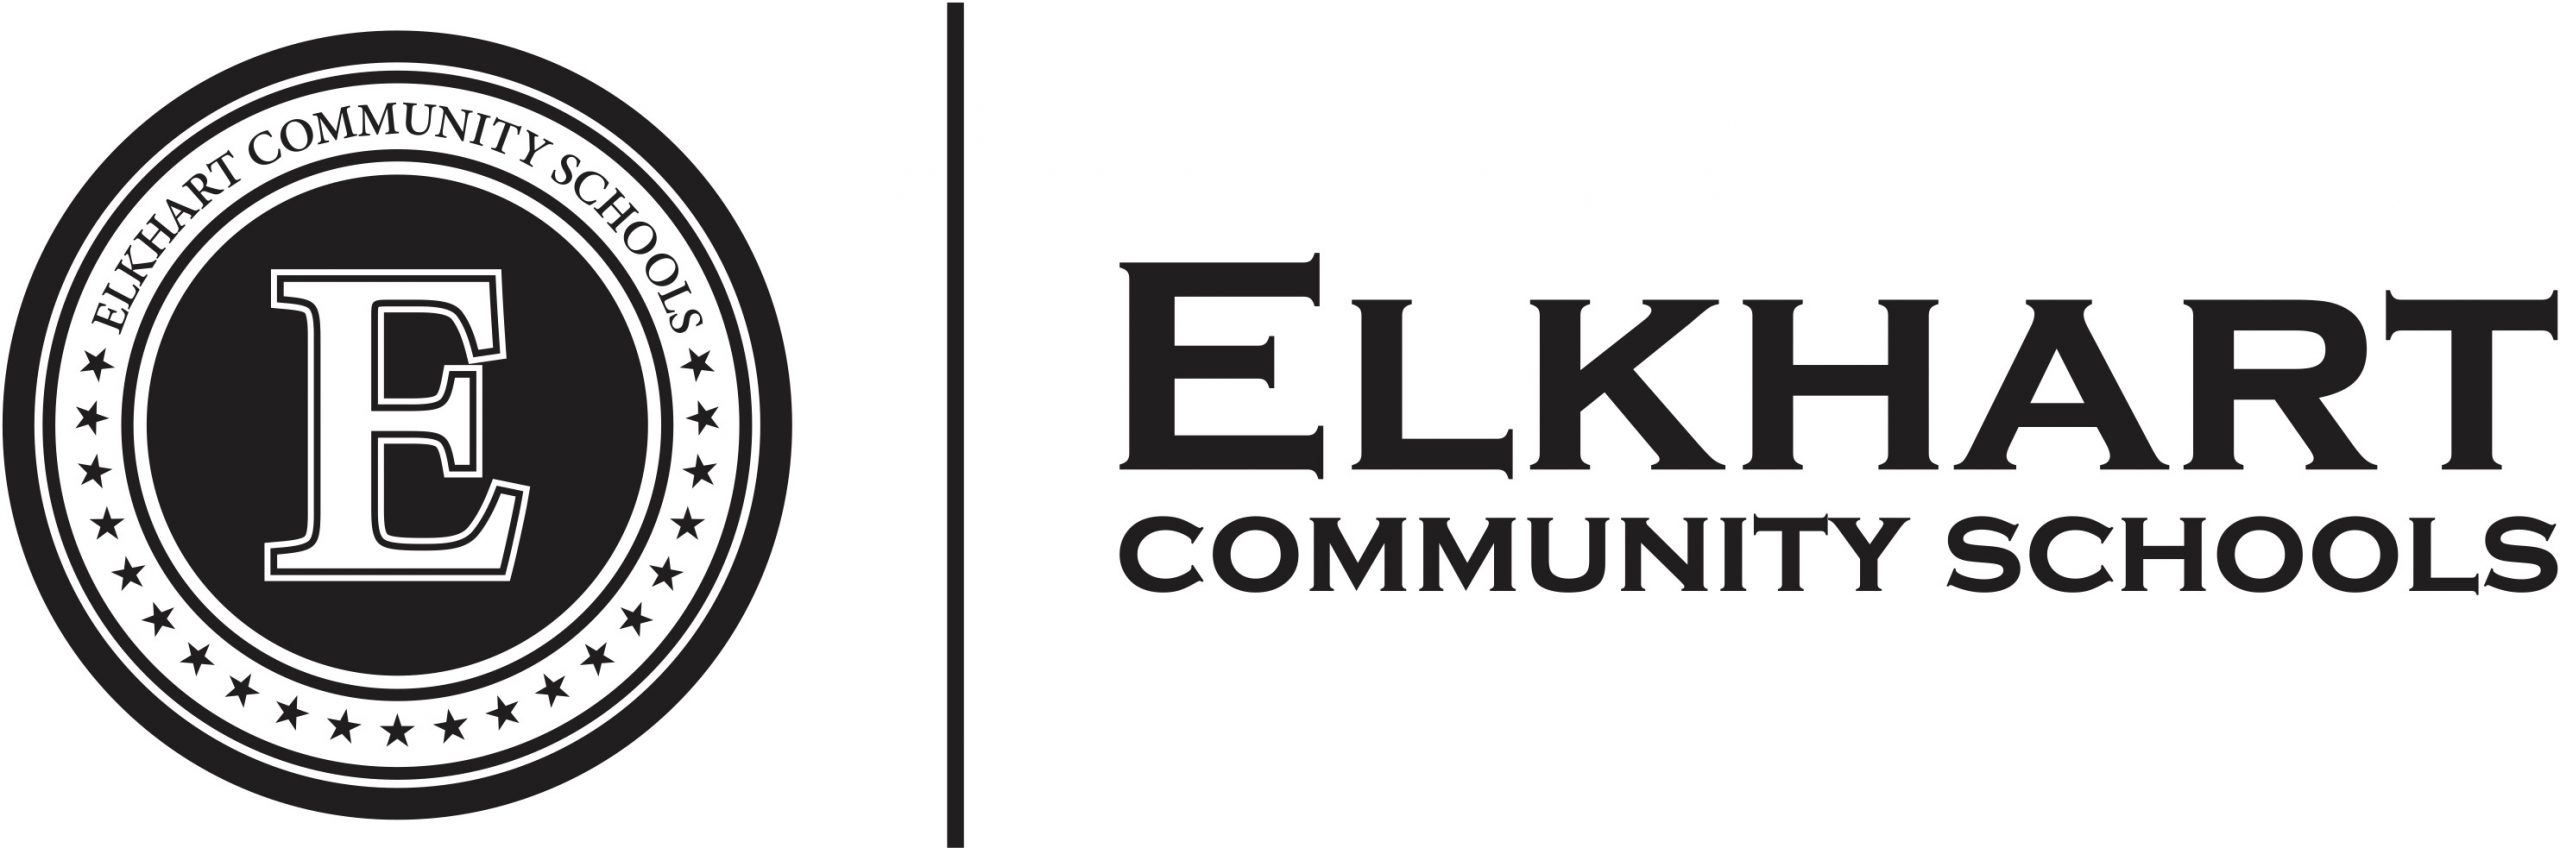 Elkhart Community Schools logo